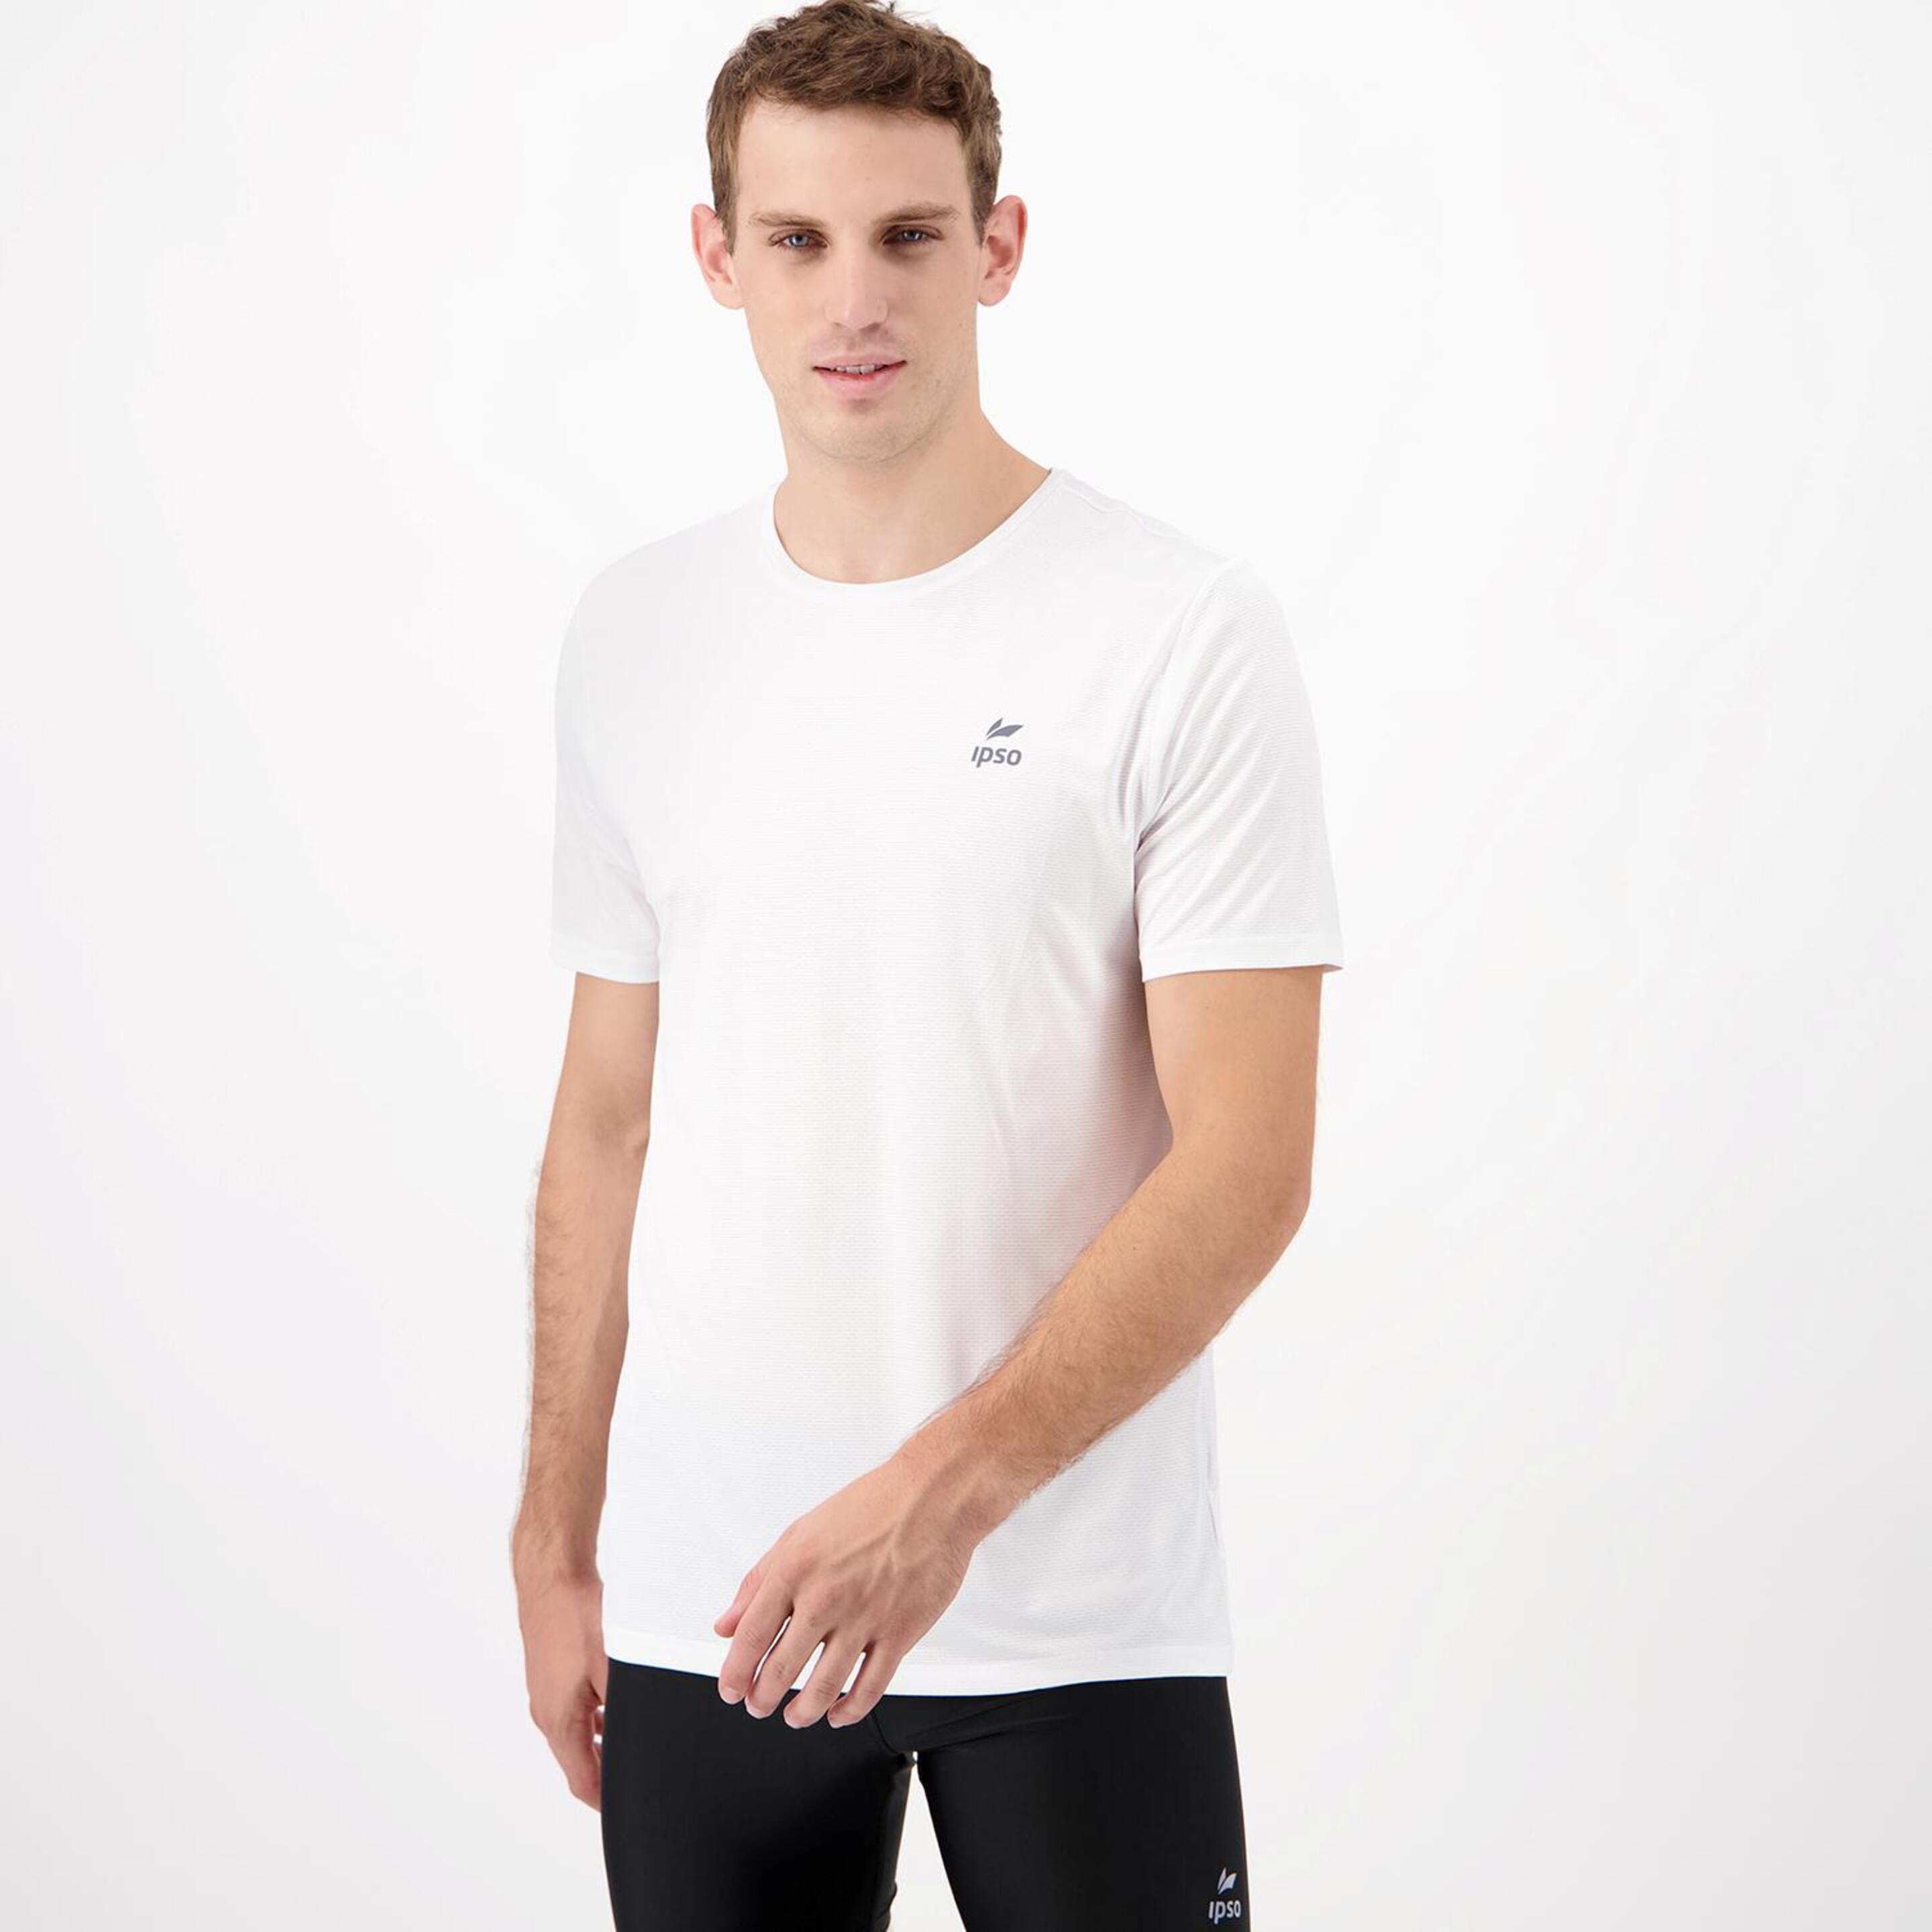 Ipso Basic - blanco - Camiseta Running Hombre